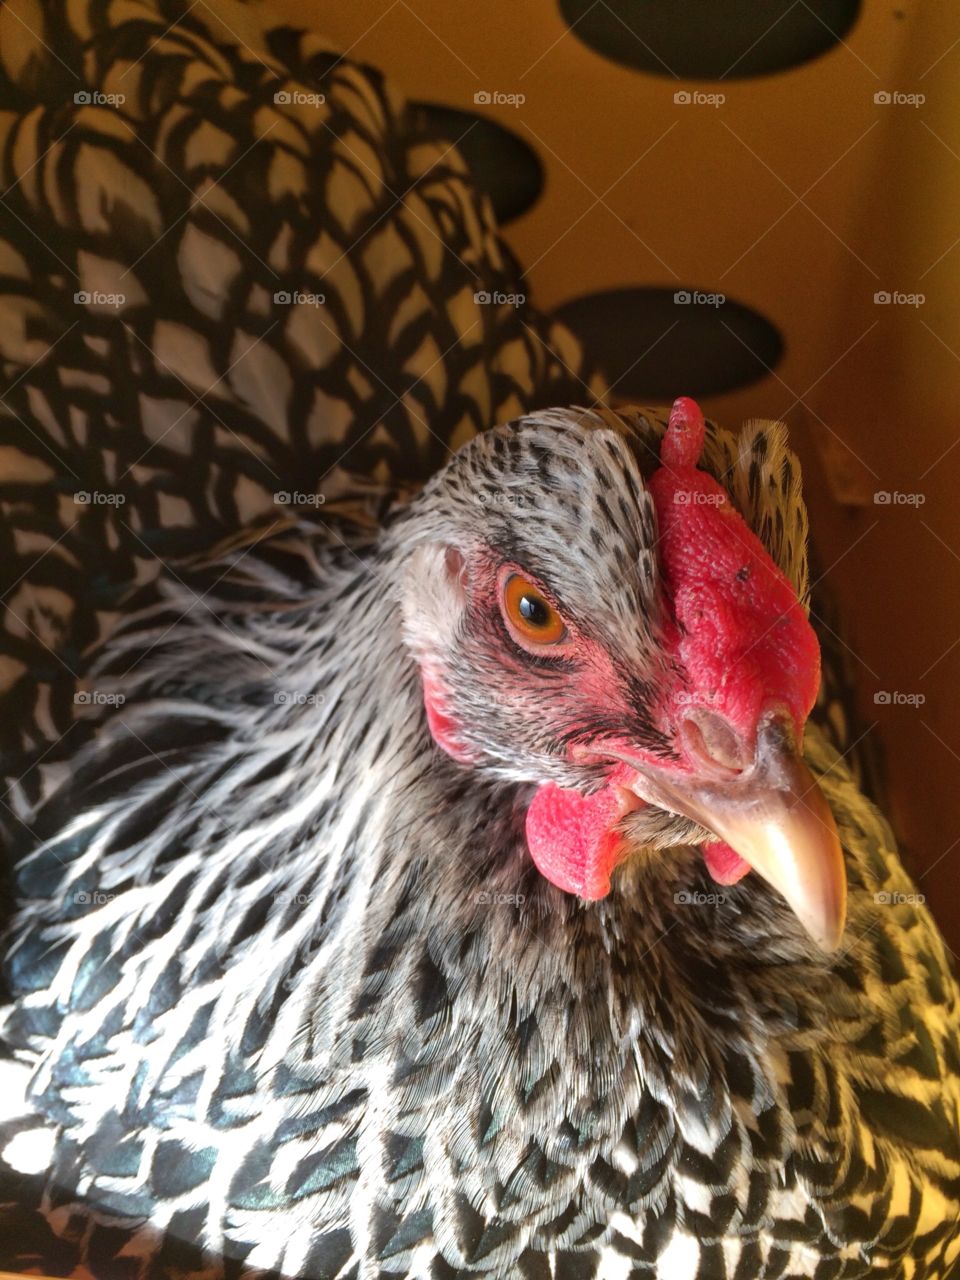 From my little chickenfarm. Closeup hen